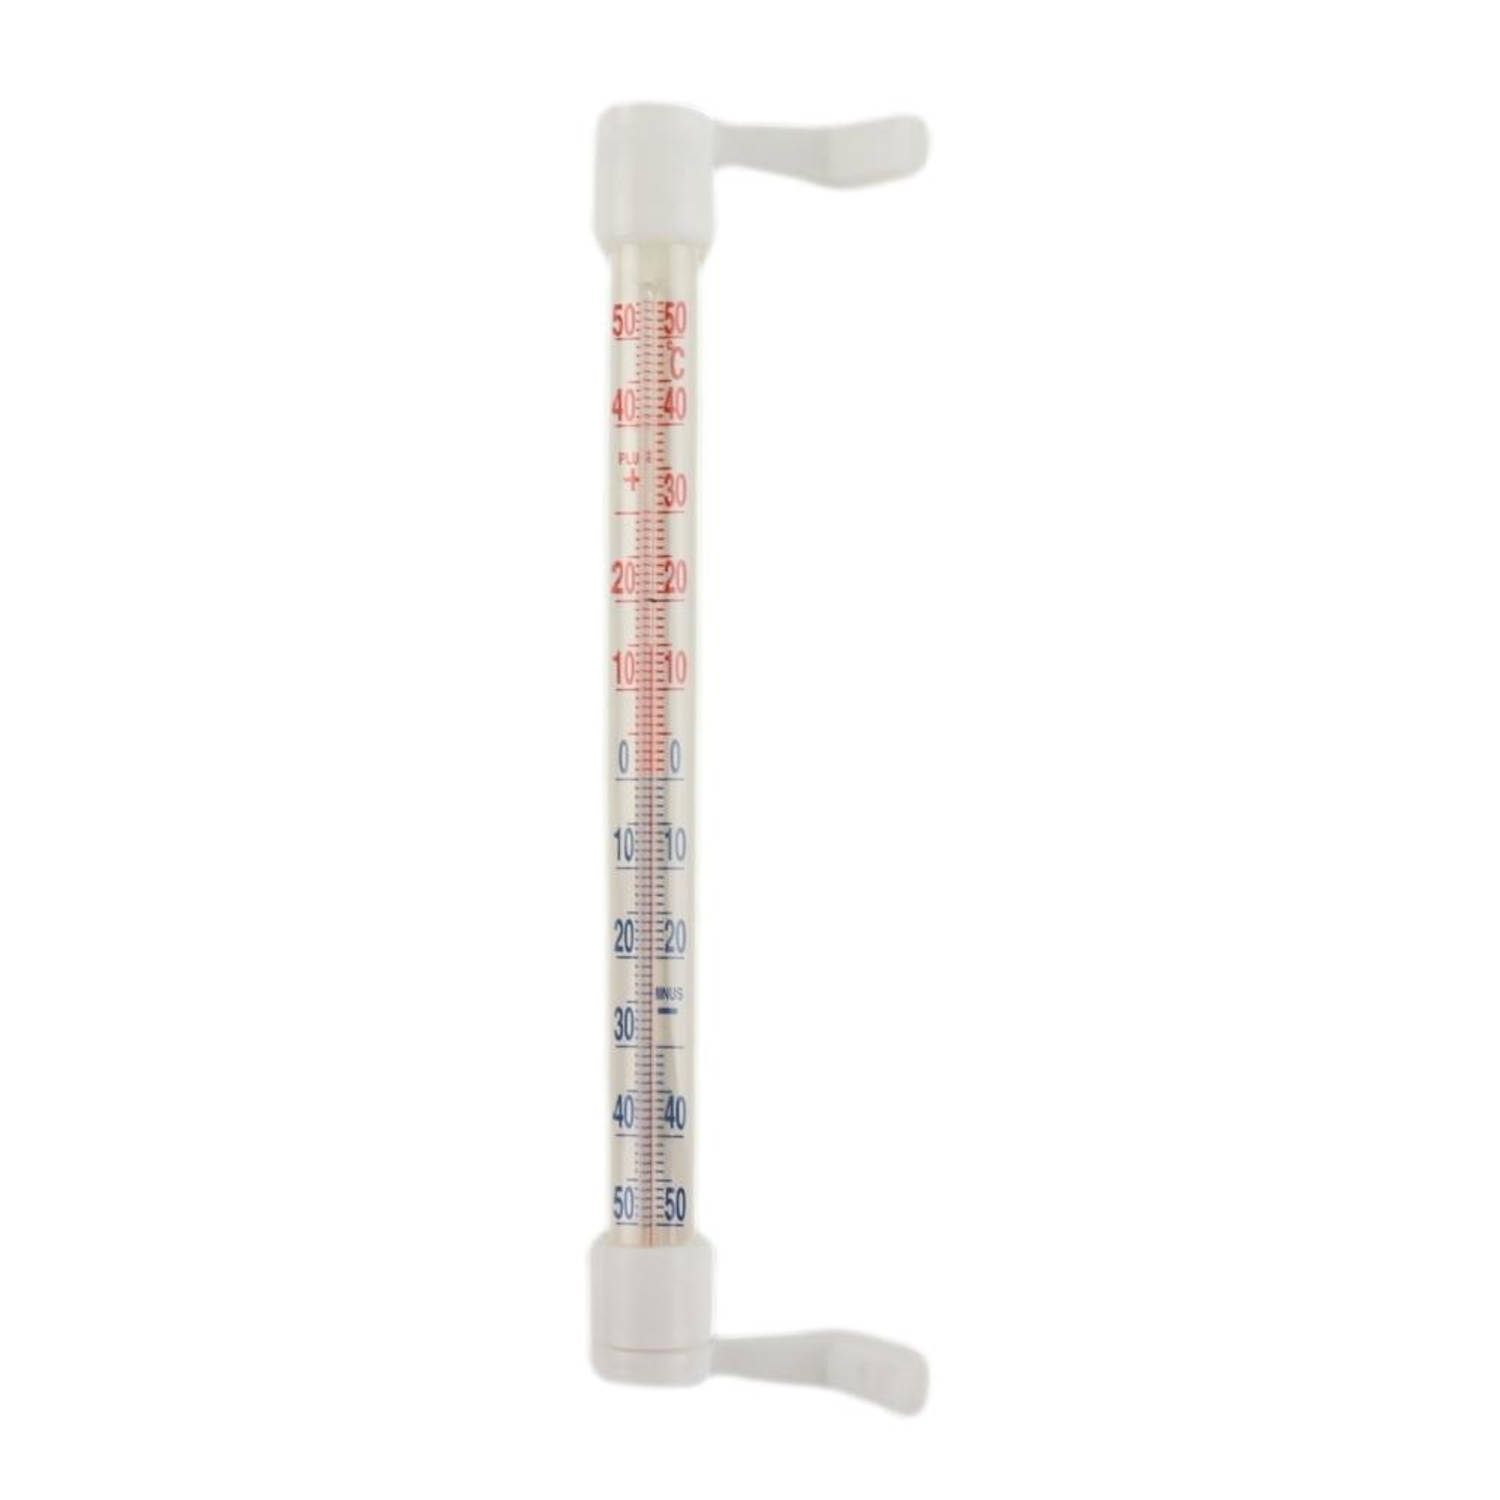 Orange85 Buiten thermometer - Draadloos - Raamthermometer